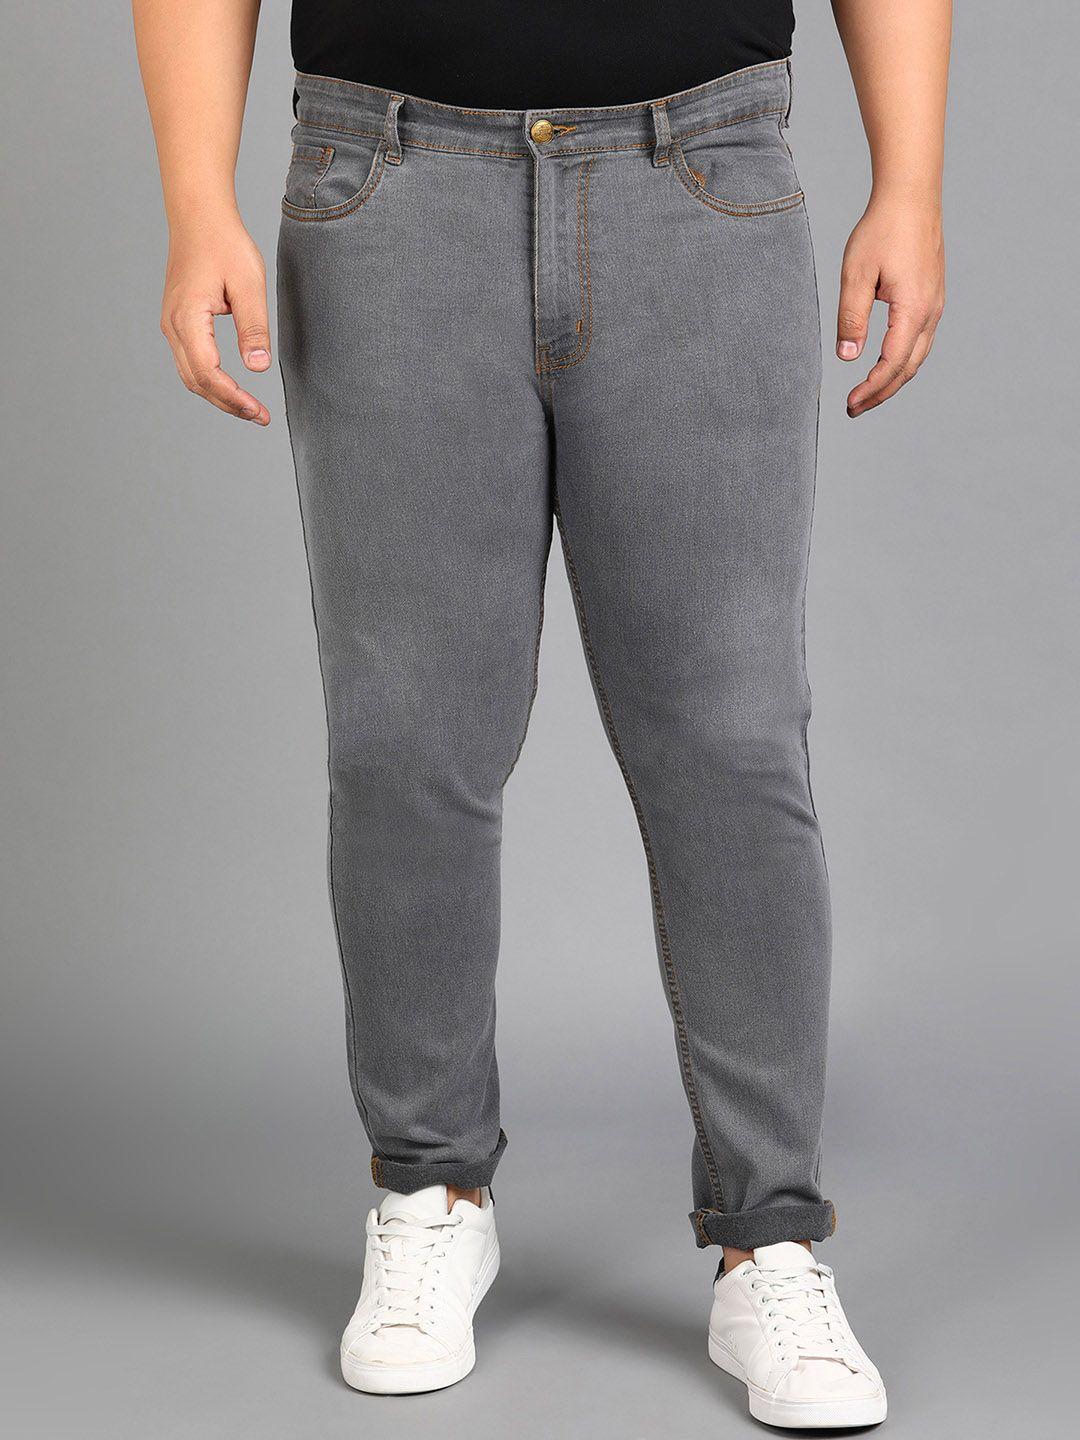 Urbano Plus Plus Size Men Slim Fit Clean Look Mid-Rise Stretchable Jeans